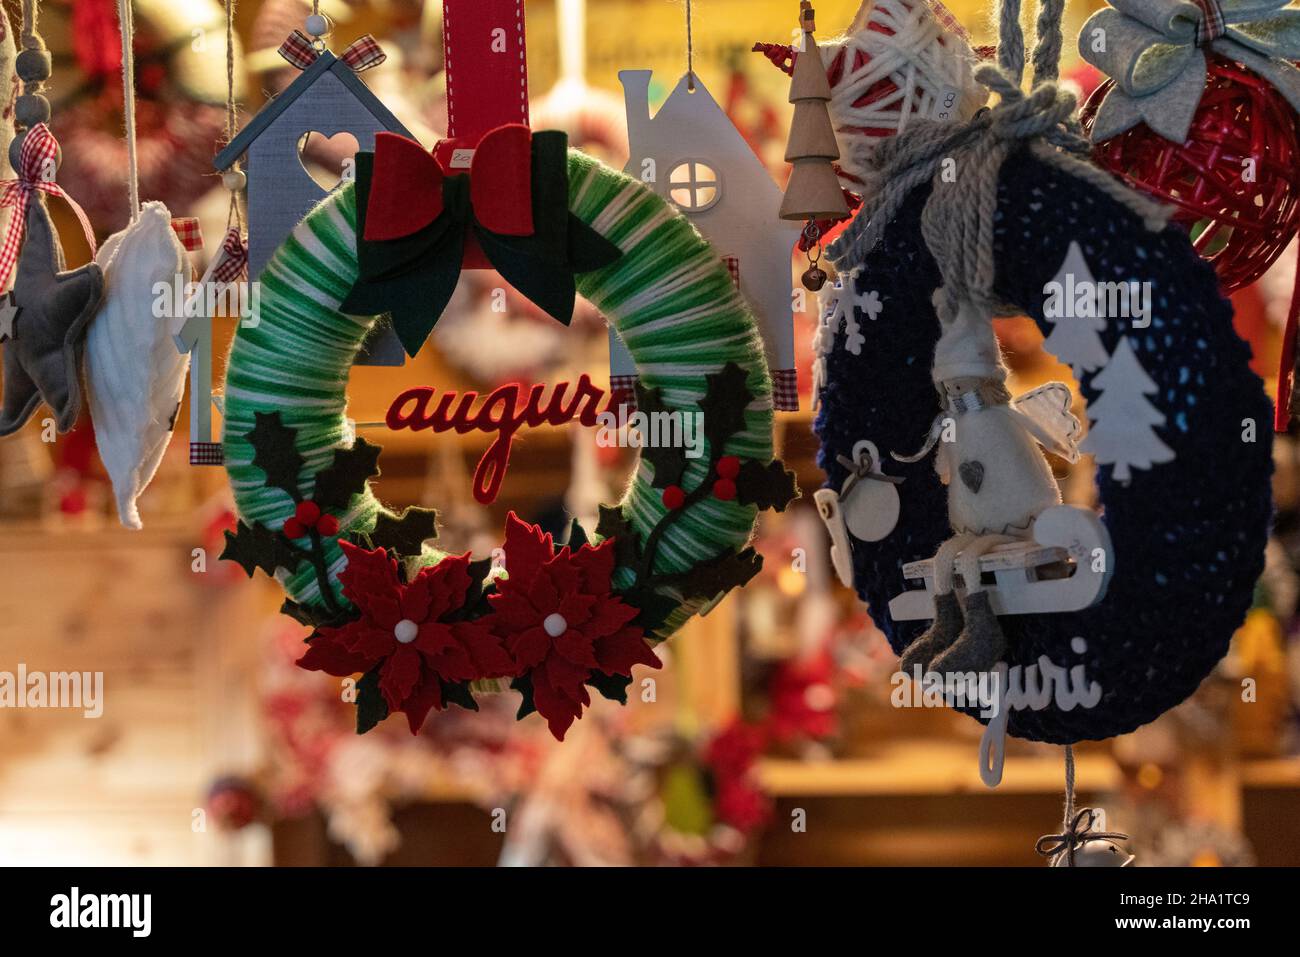 Campo di Giove, l'Aquila, Italy - Christmas markets Stock Photo